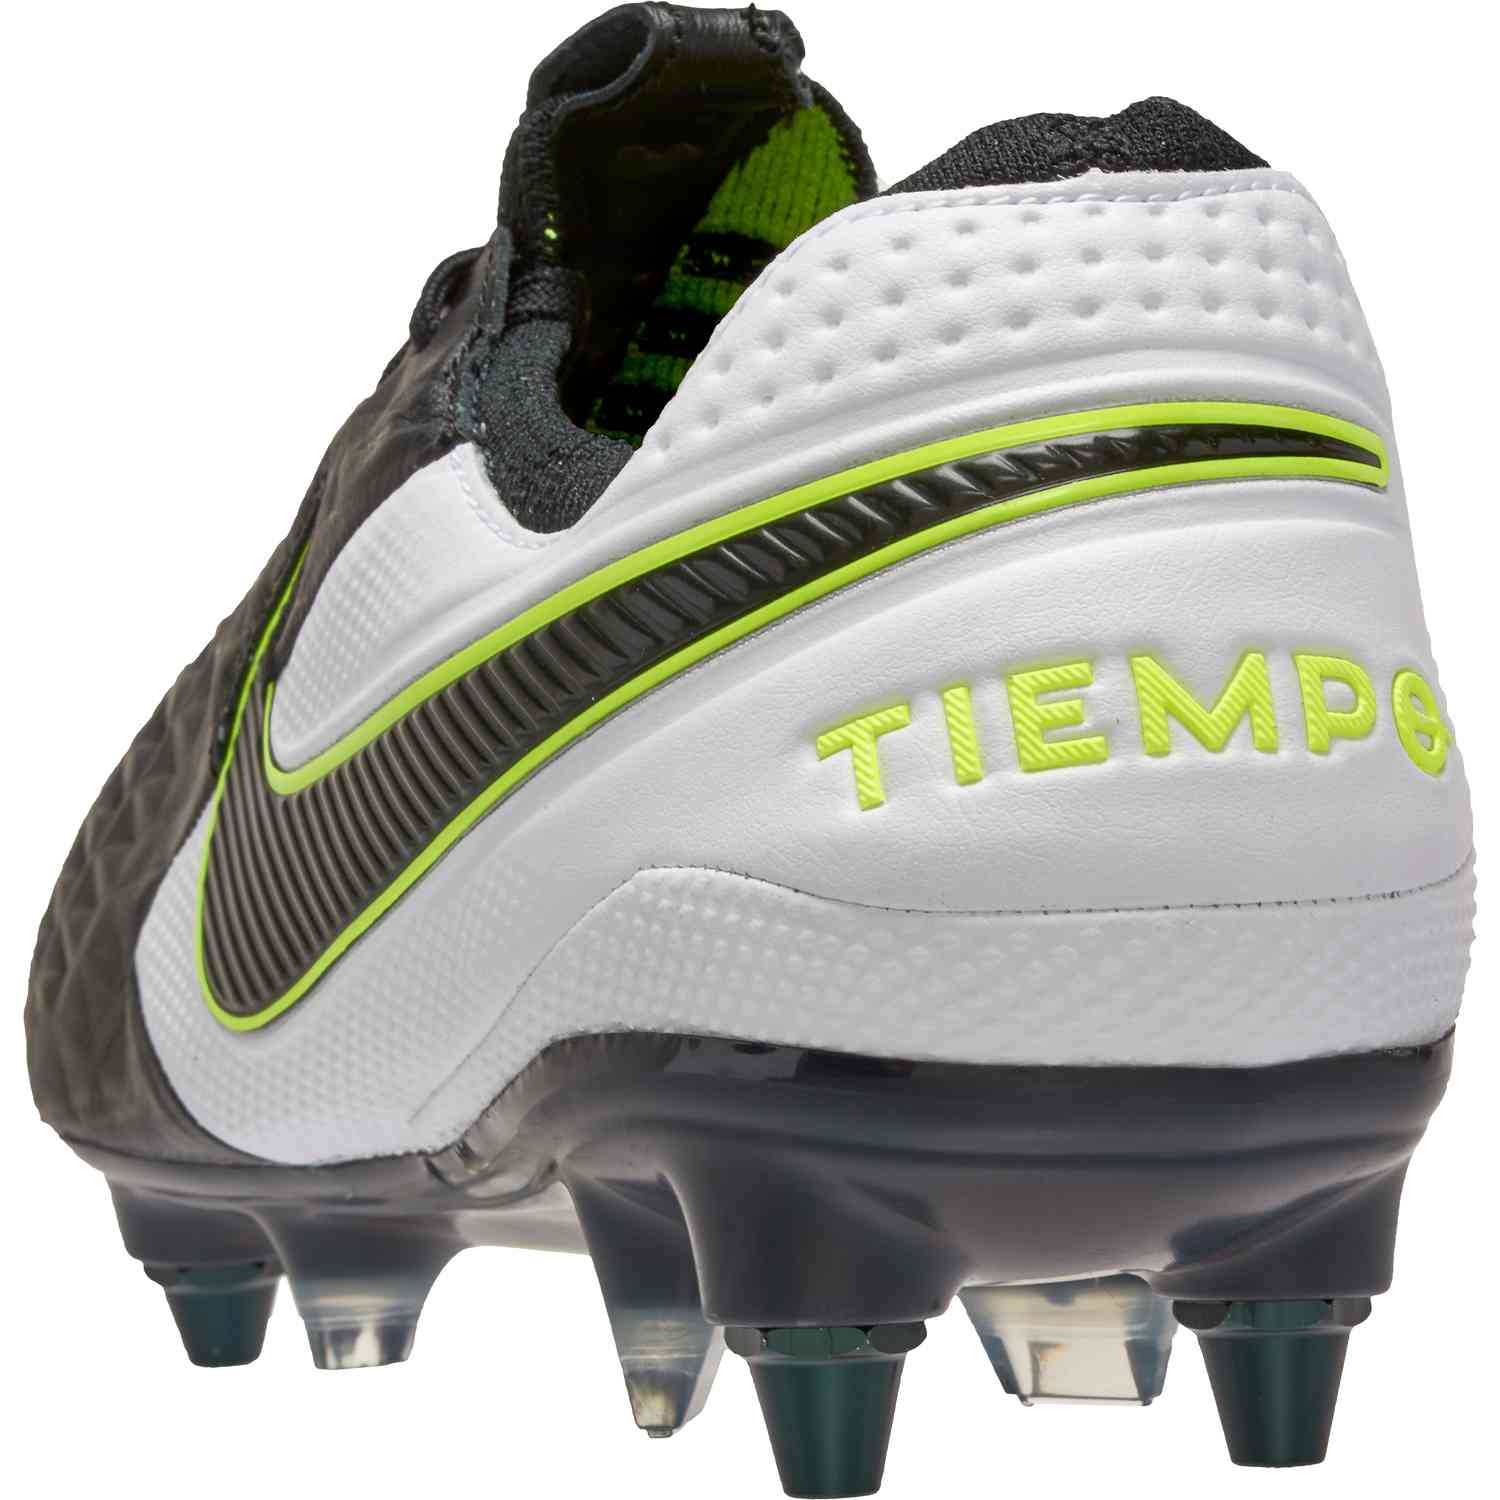 Time Legend 8 Elite men 's molded football boots.